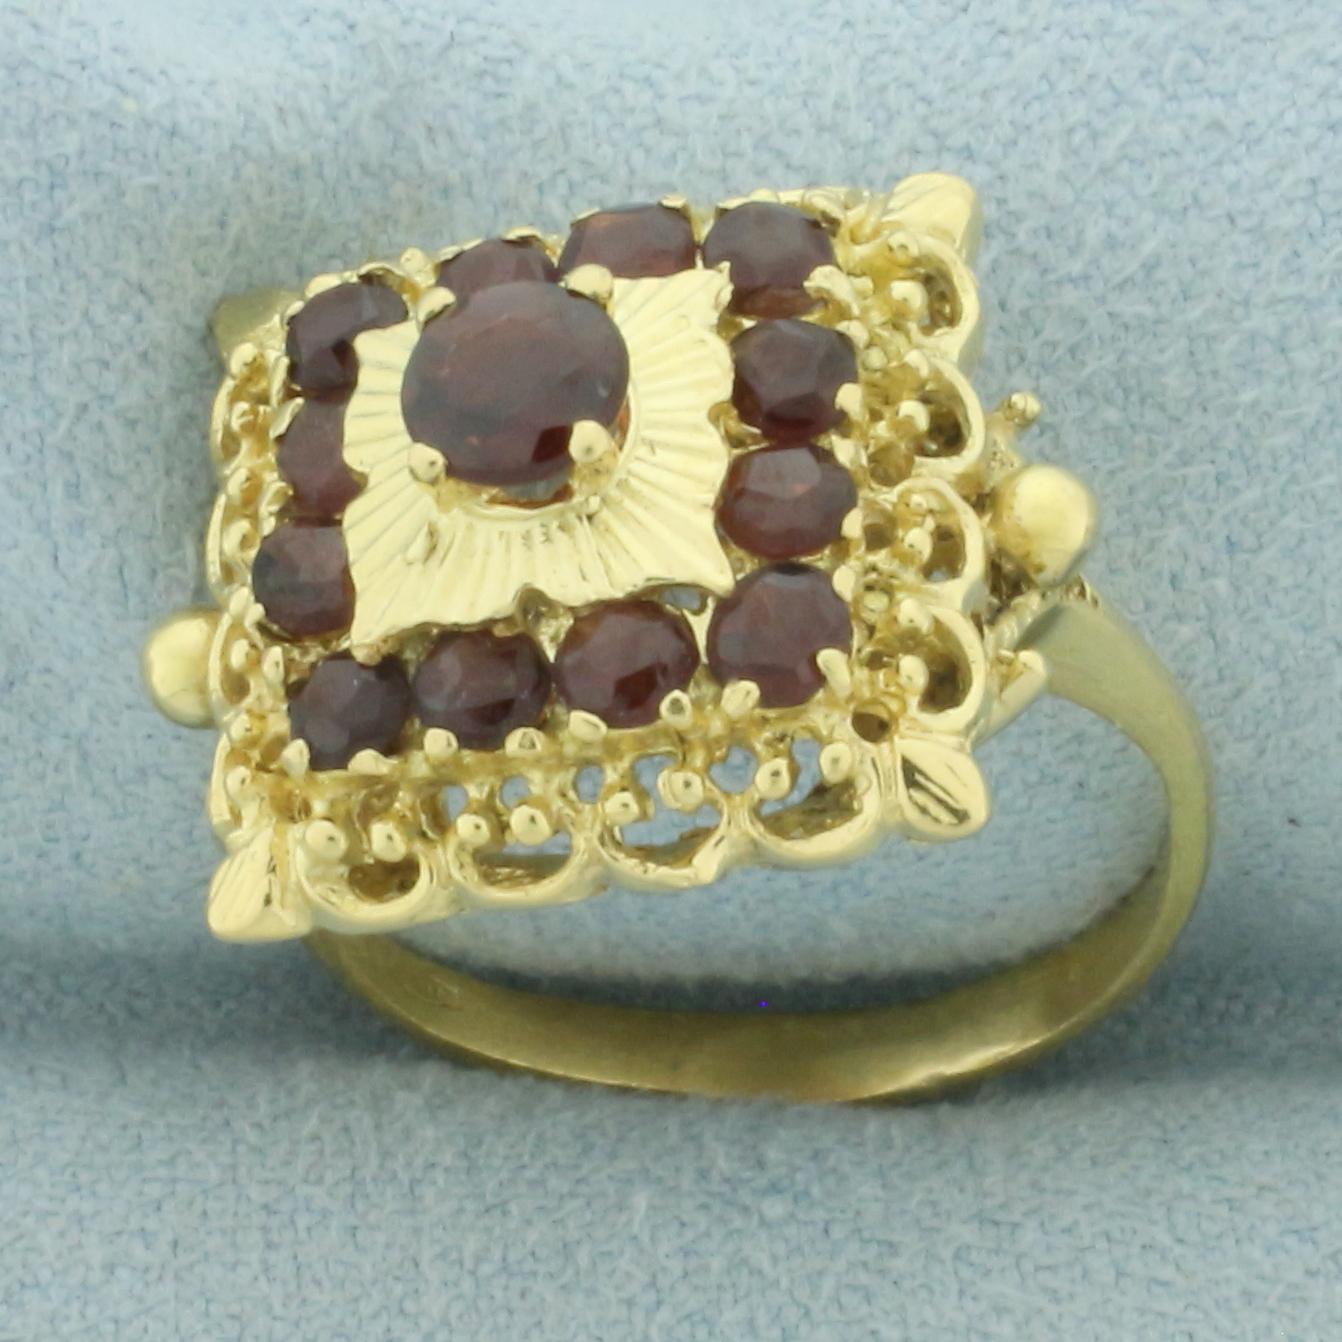 Vintage Garnet Ring In In 18k Yellow Gold